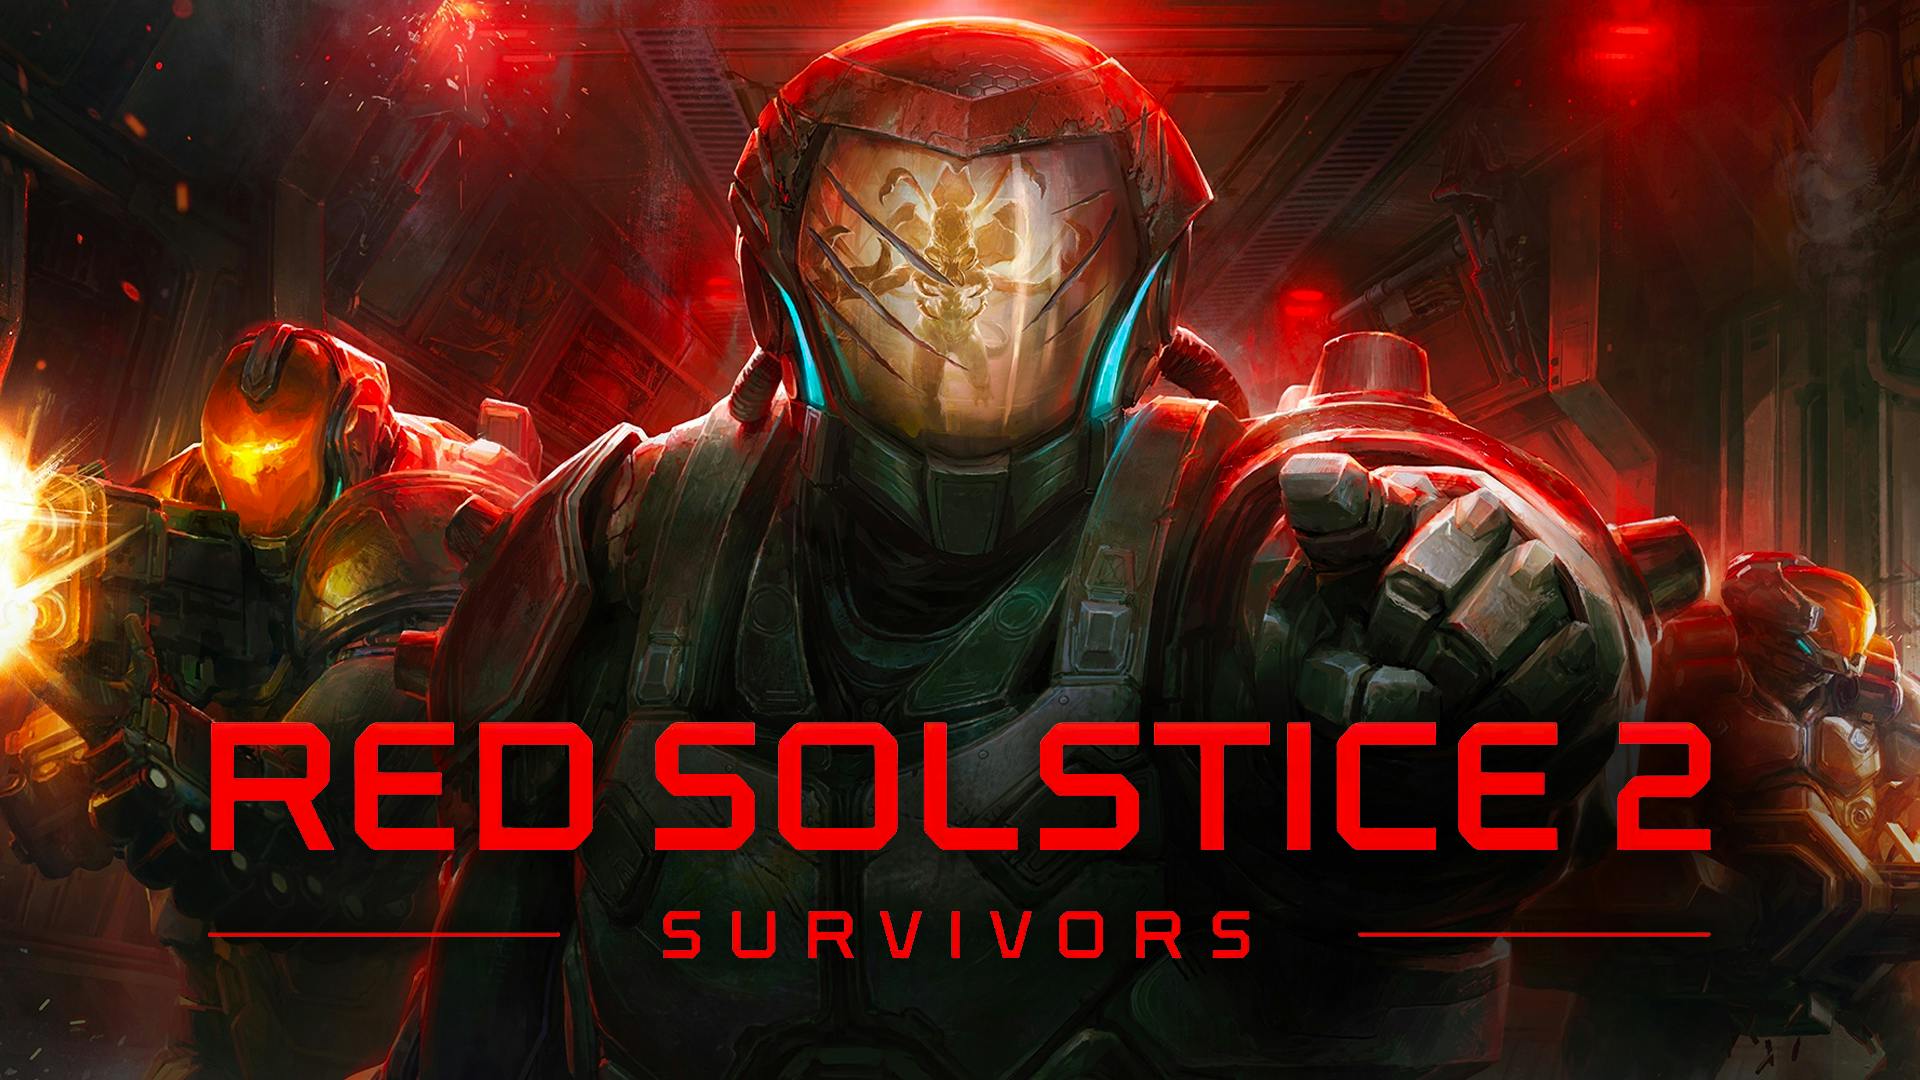 505 games игры. Red Solstice 2. Red Solstice 2 Survivors игрушка. Red Solstice Condatis. Red Solstice 2: Survivors Guilds Адский огонь.